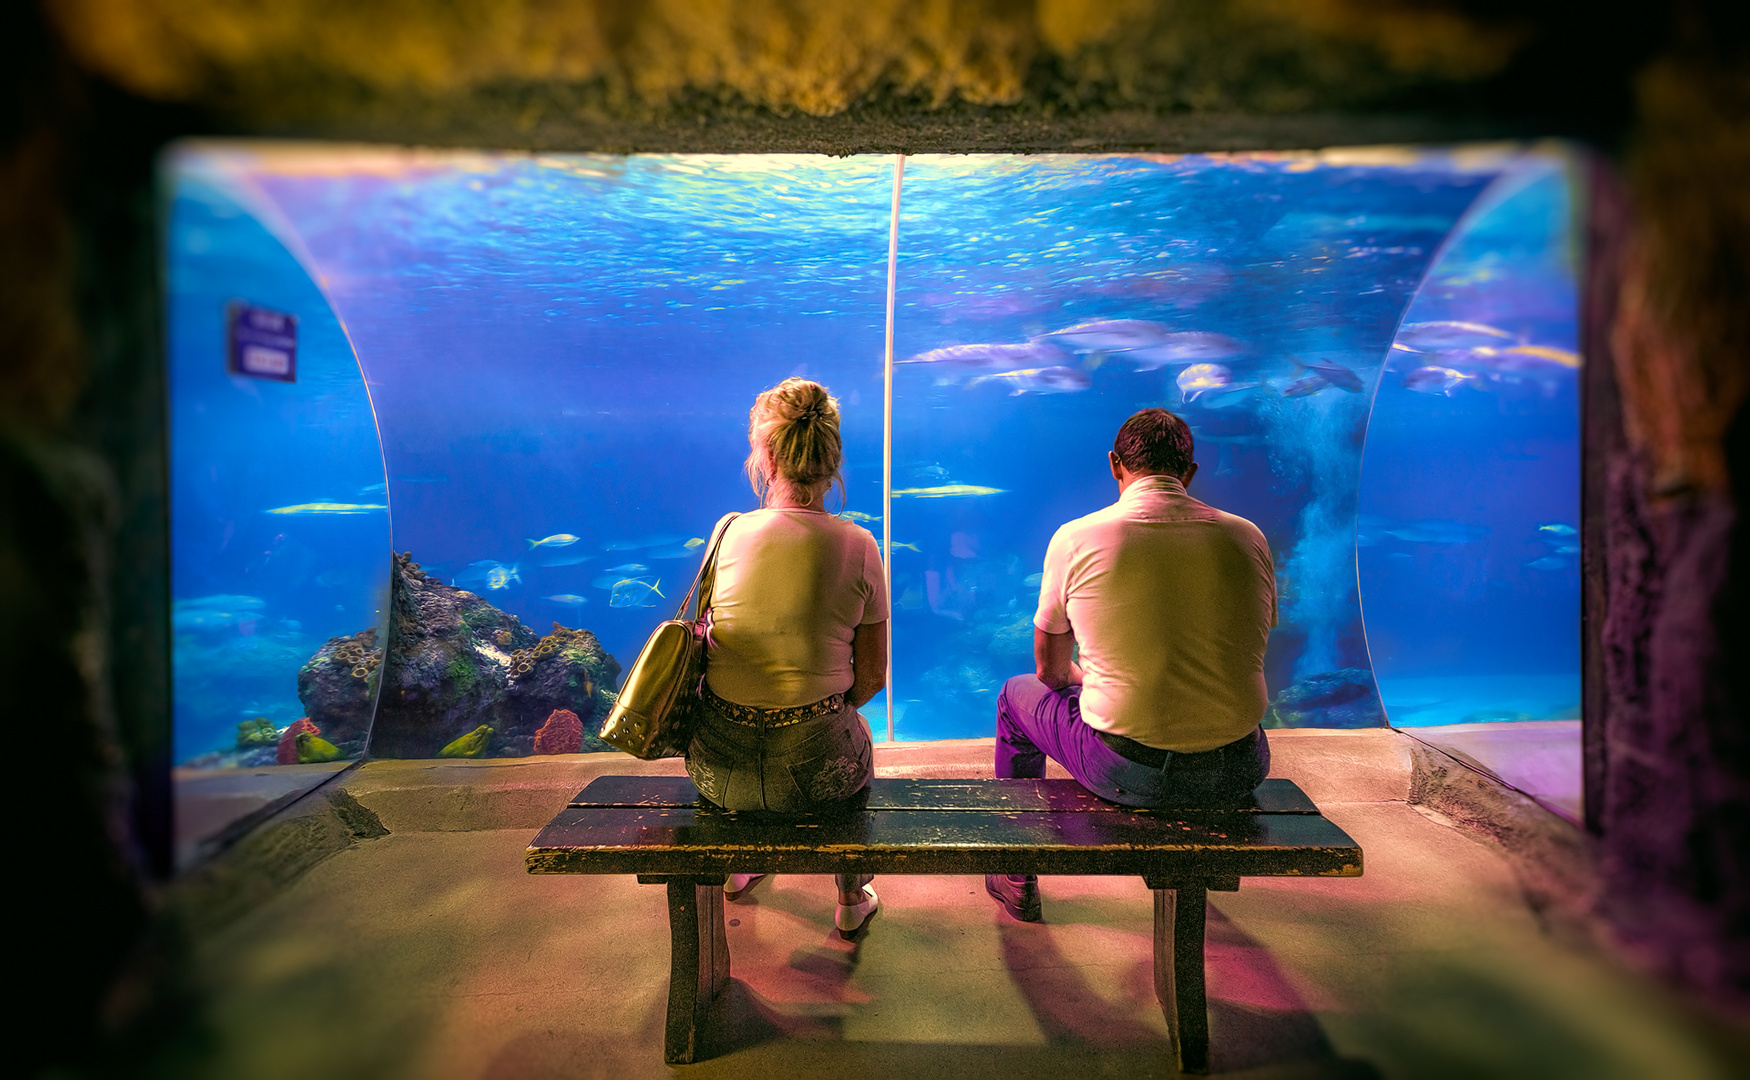 Guckst du ins Aquarium oder lebst du darin...?